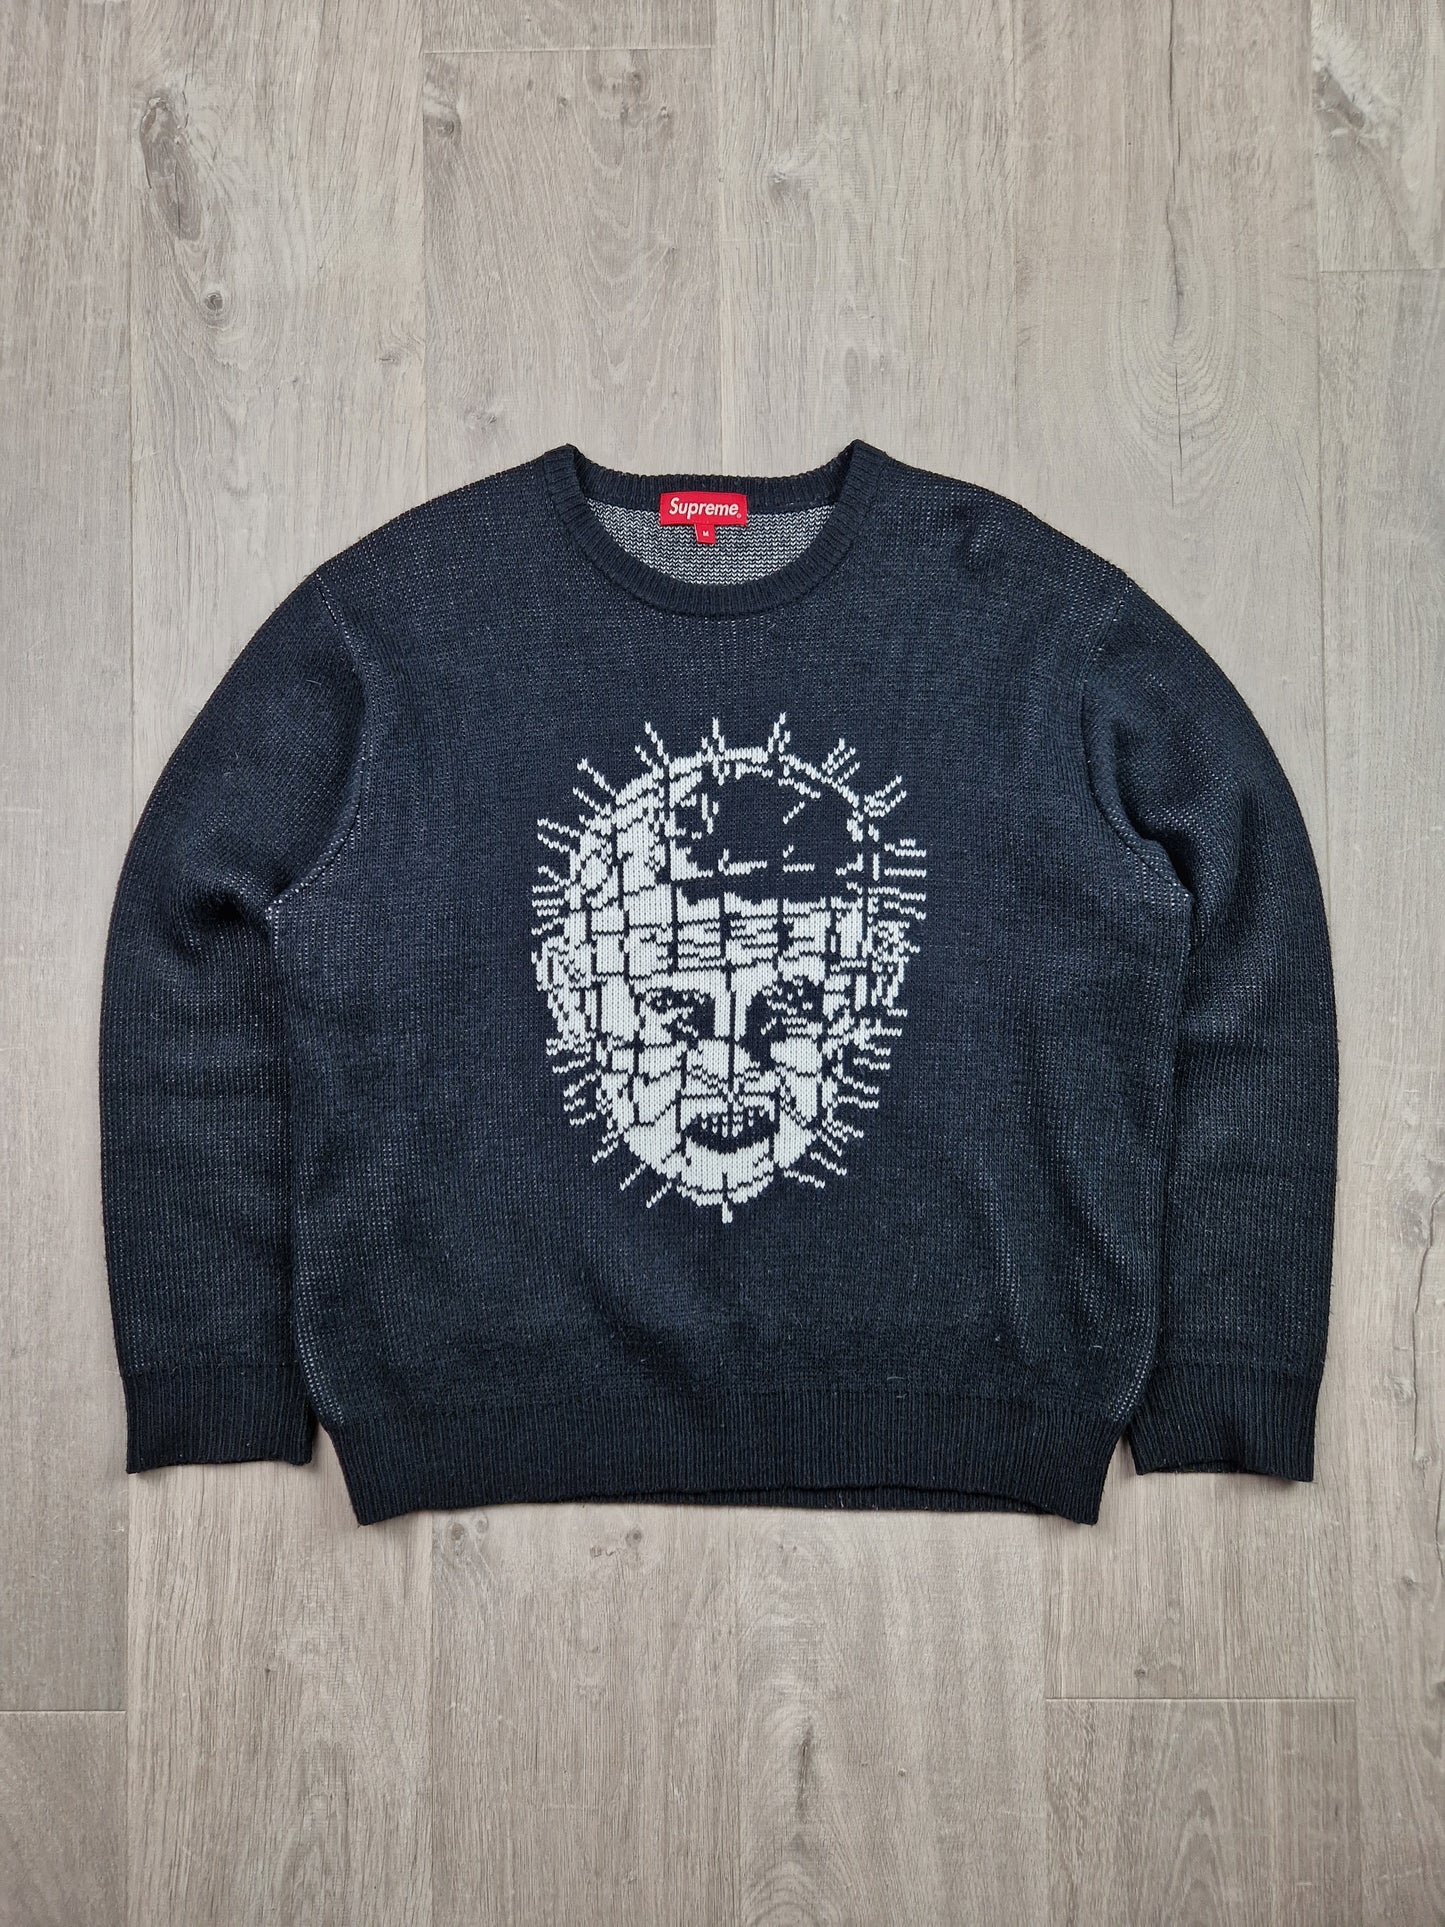 Supreme Hellraiser Knit Sweater (M)